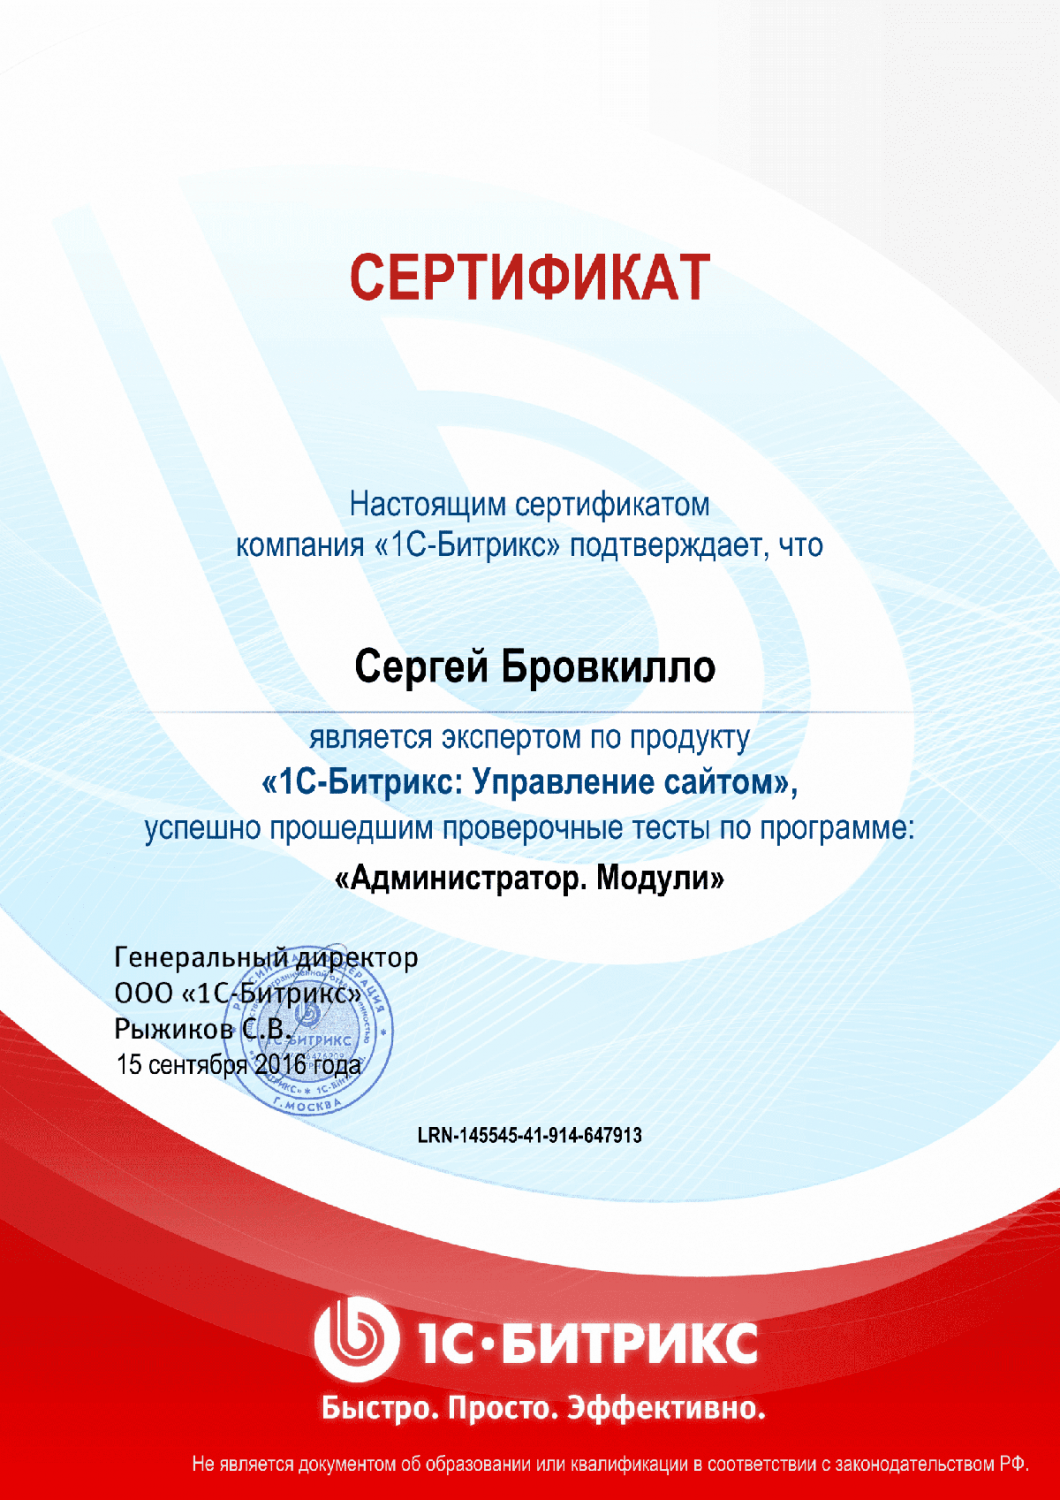 Сертификат эксперта по программе "Администратор. Модули" в Южно-Сахалинска